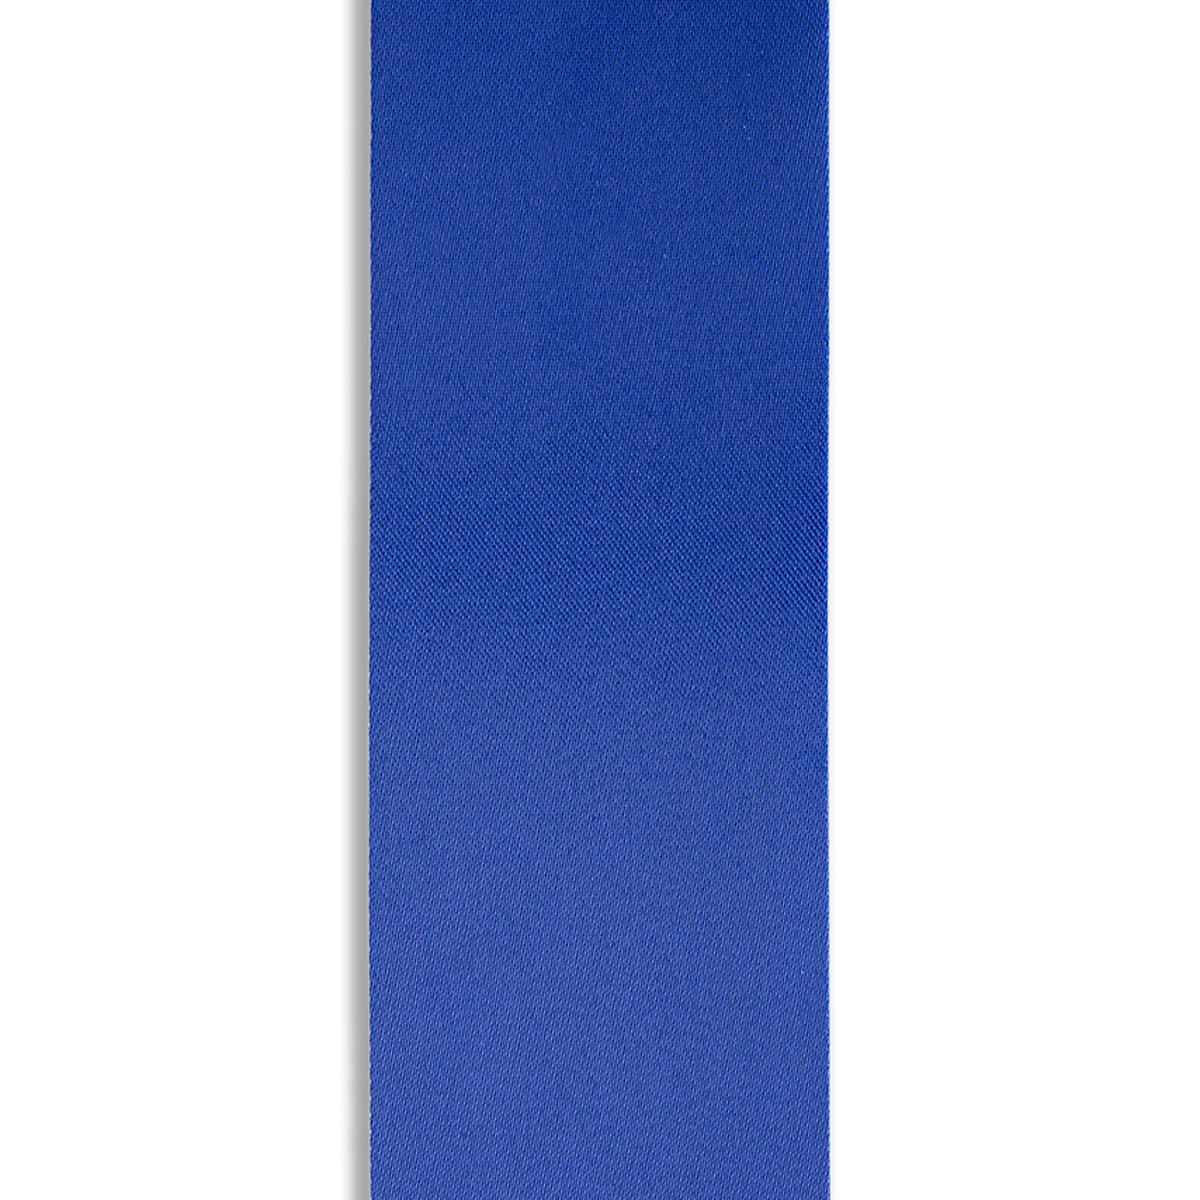 NEW Wrights Satin Blanket Binding 4 3/4YD Lavender, Light Blue